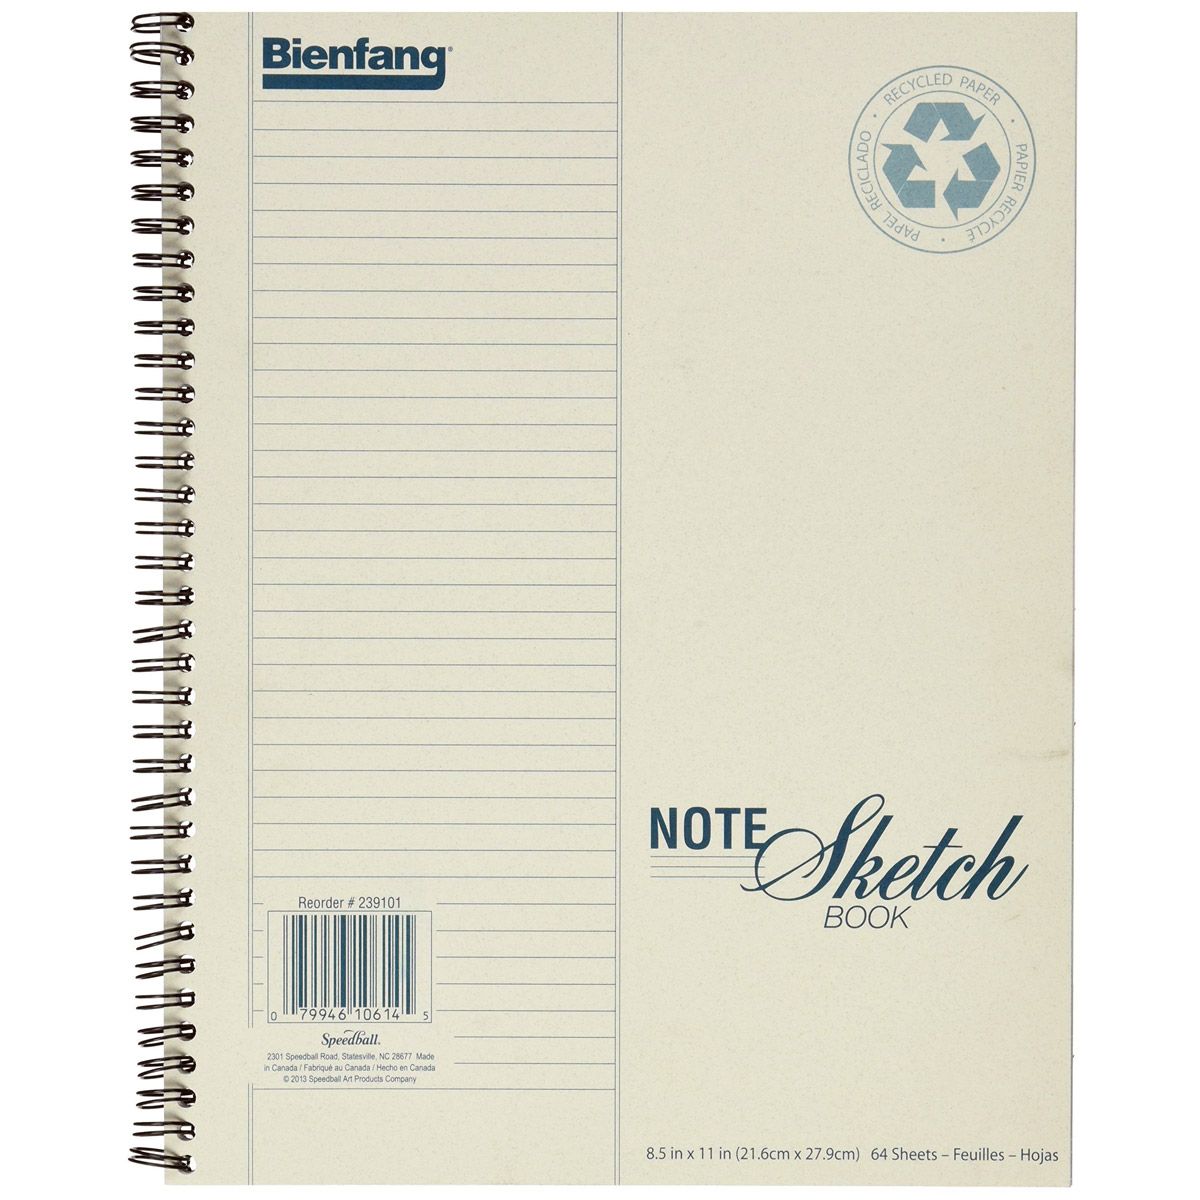 Bienfang Note Sketch Book 5.5 x 8.5 inch